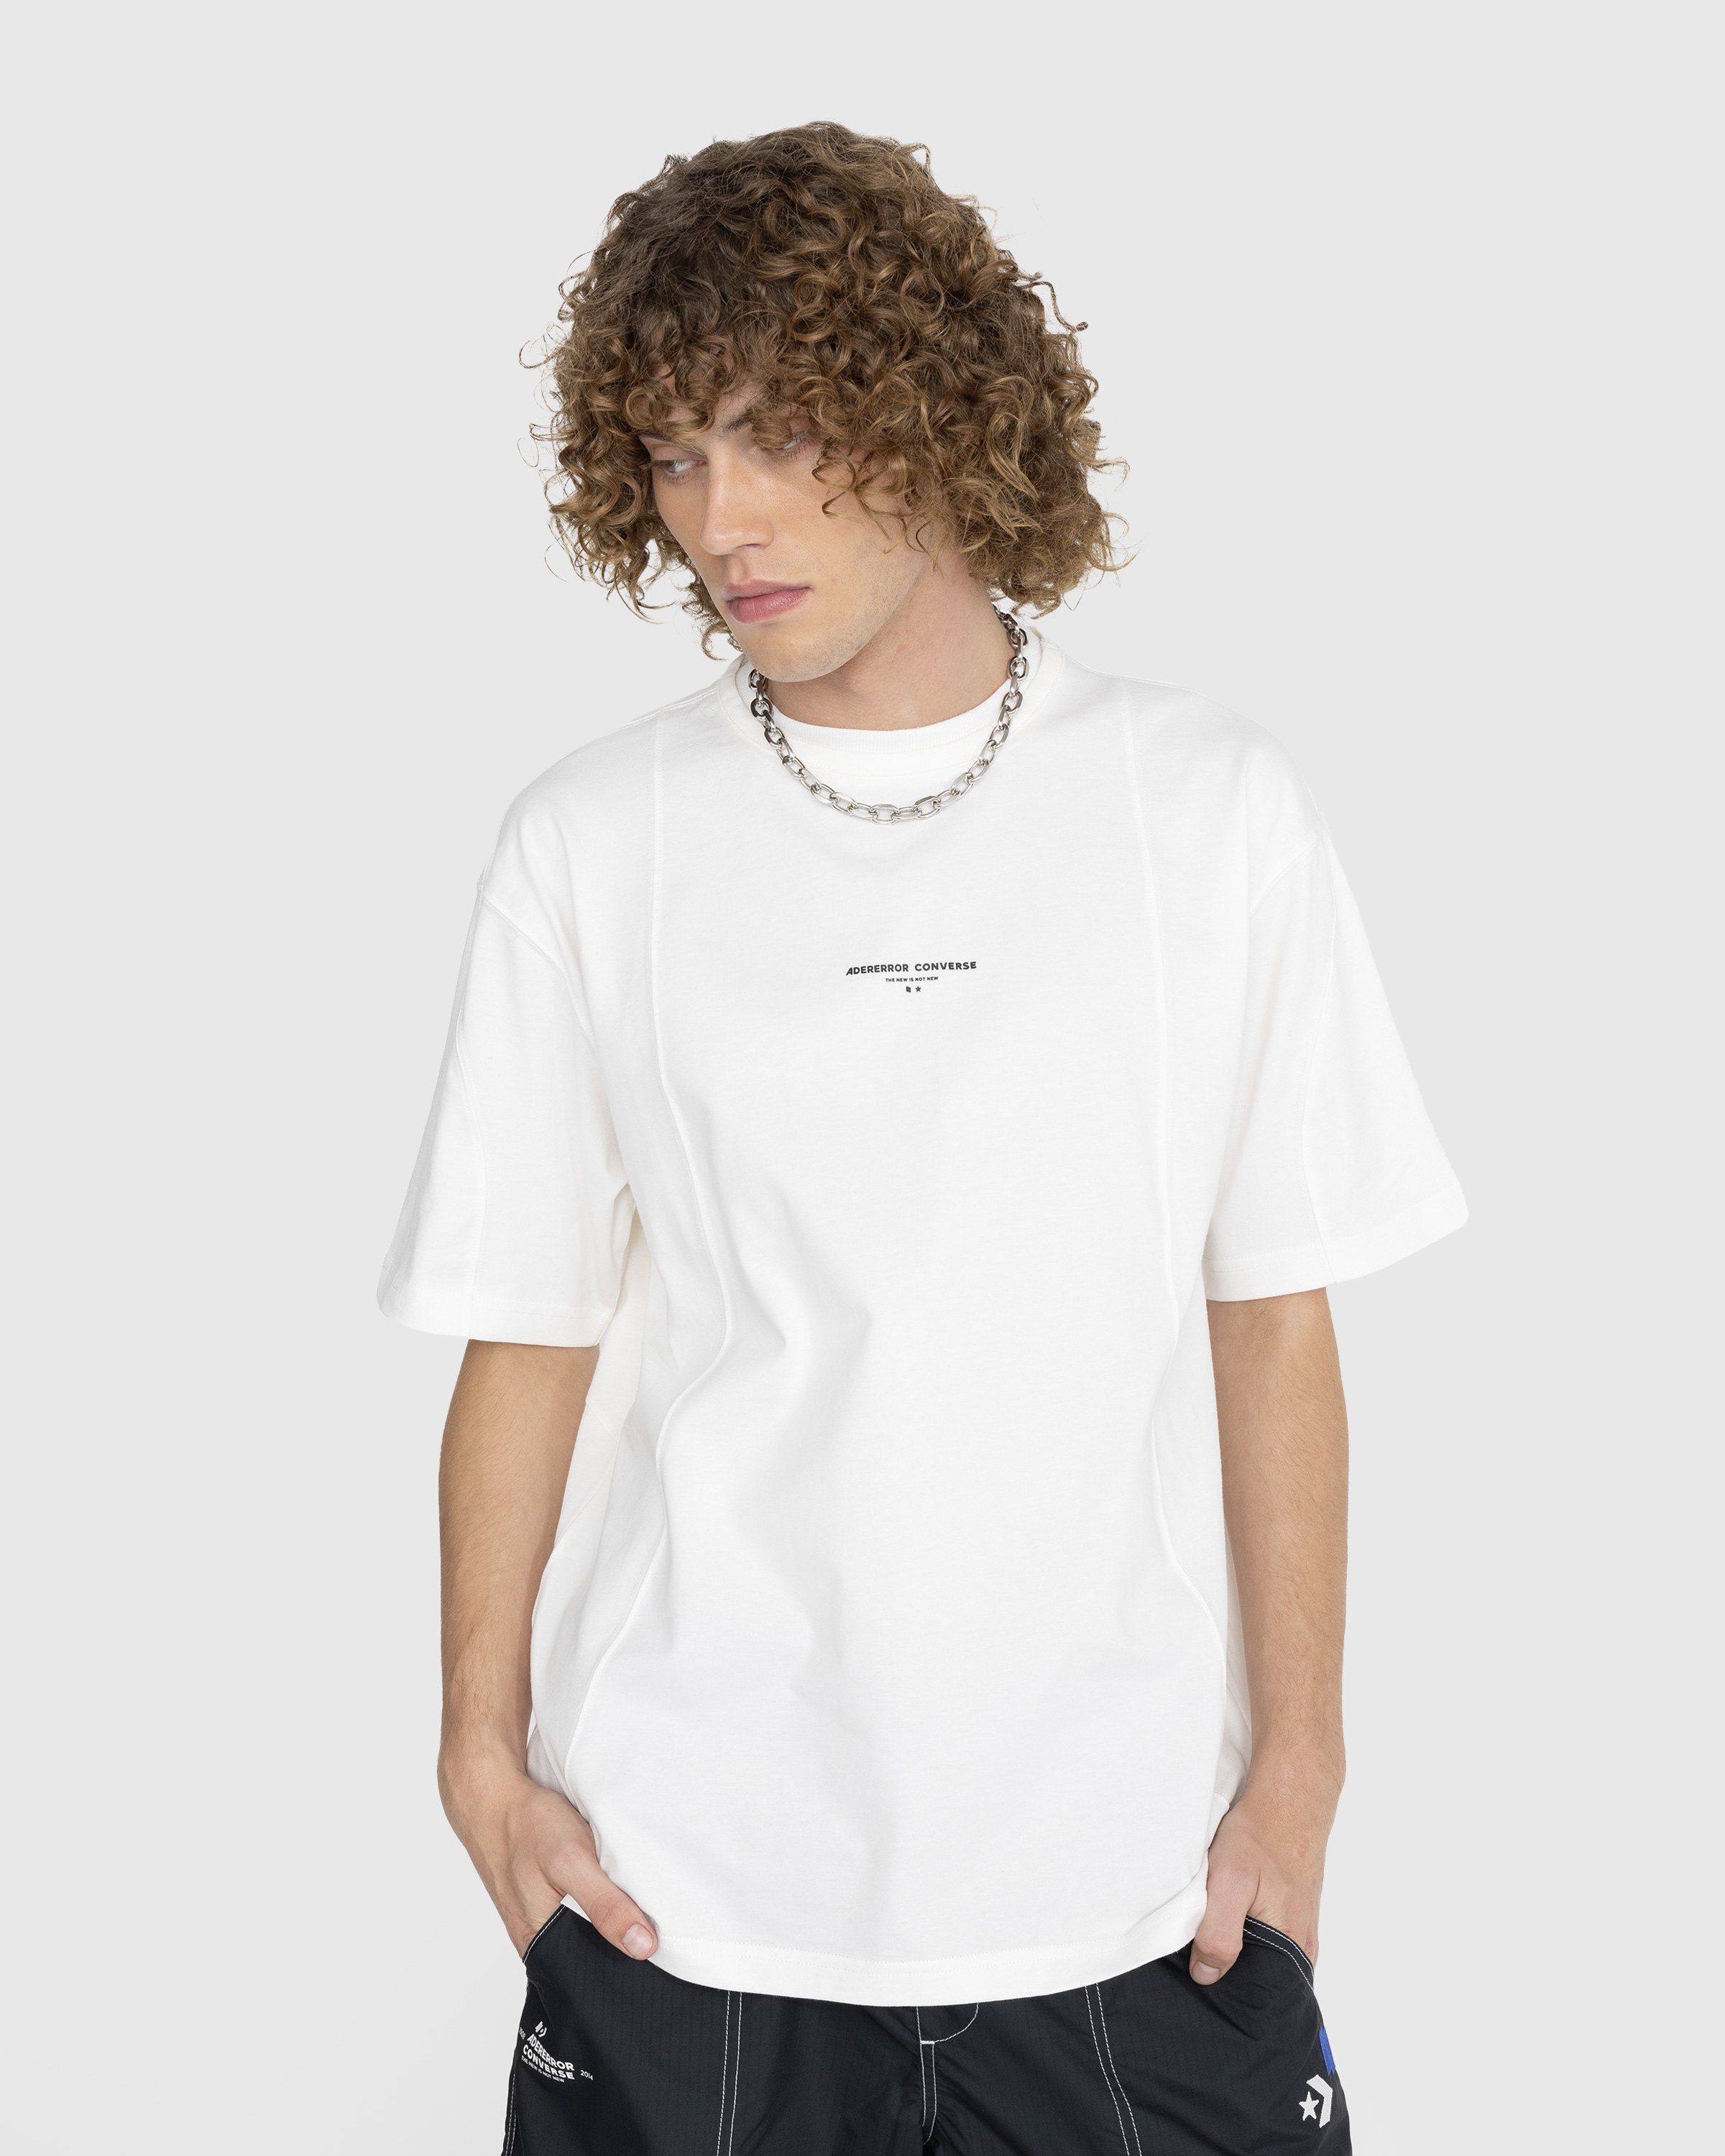 Converse x Ader Error - Shapes T-Shirt Cloud Dancer - Clothing - Beige - Image 2